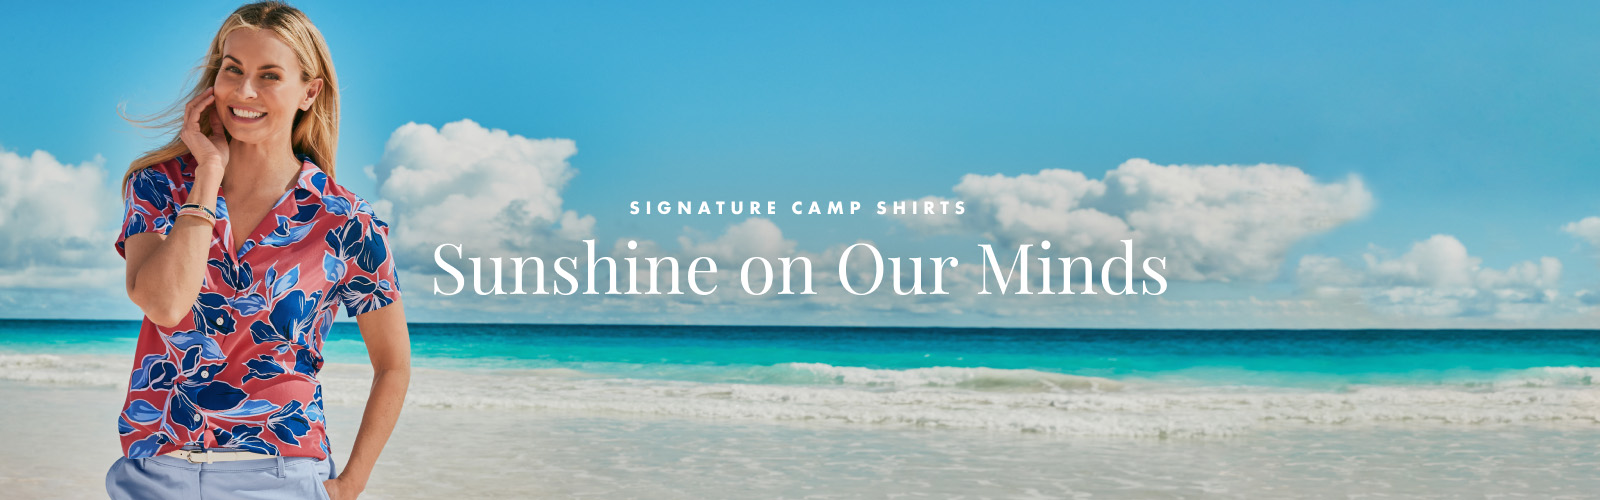 Signature Camp Shirts - Sunshine on Our Minds